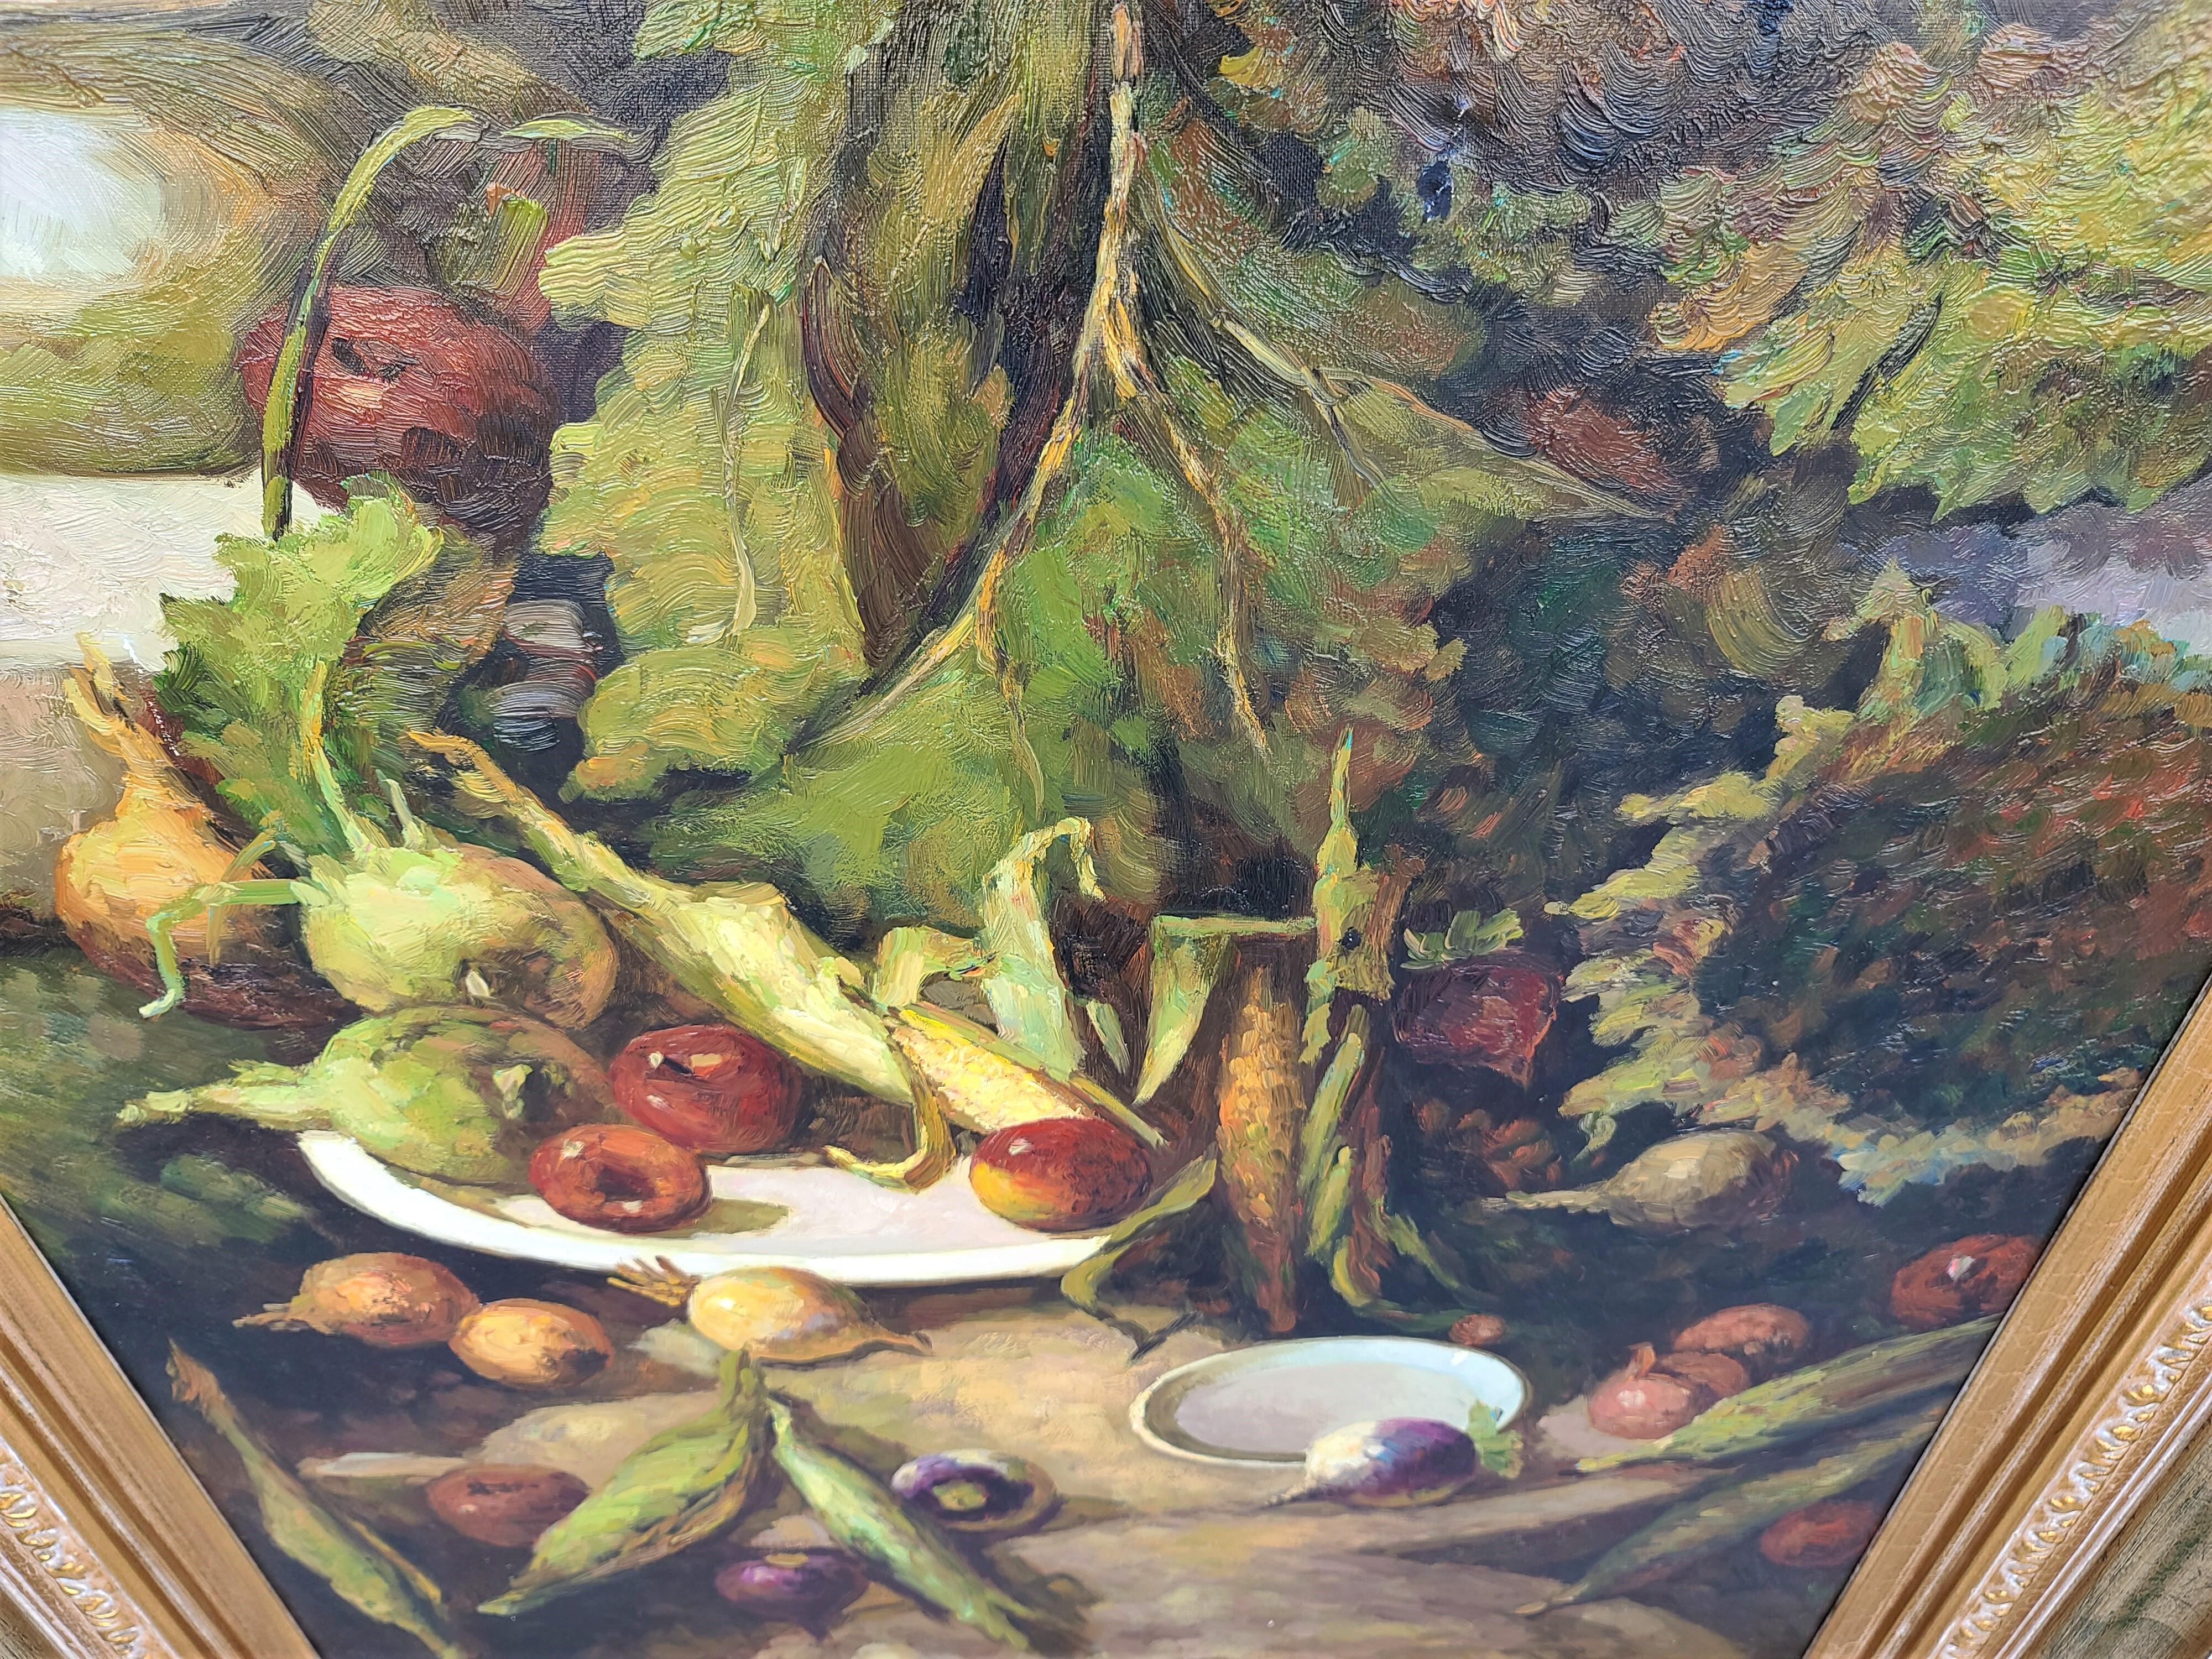 Painted Huge Framed Signed Honer Still Life Autumn Harvest Oil Painting on Canvas For Sale